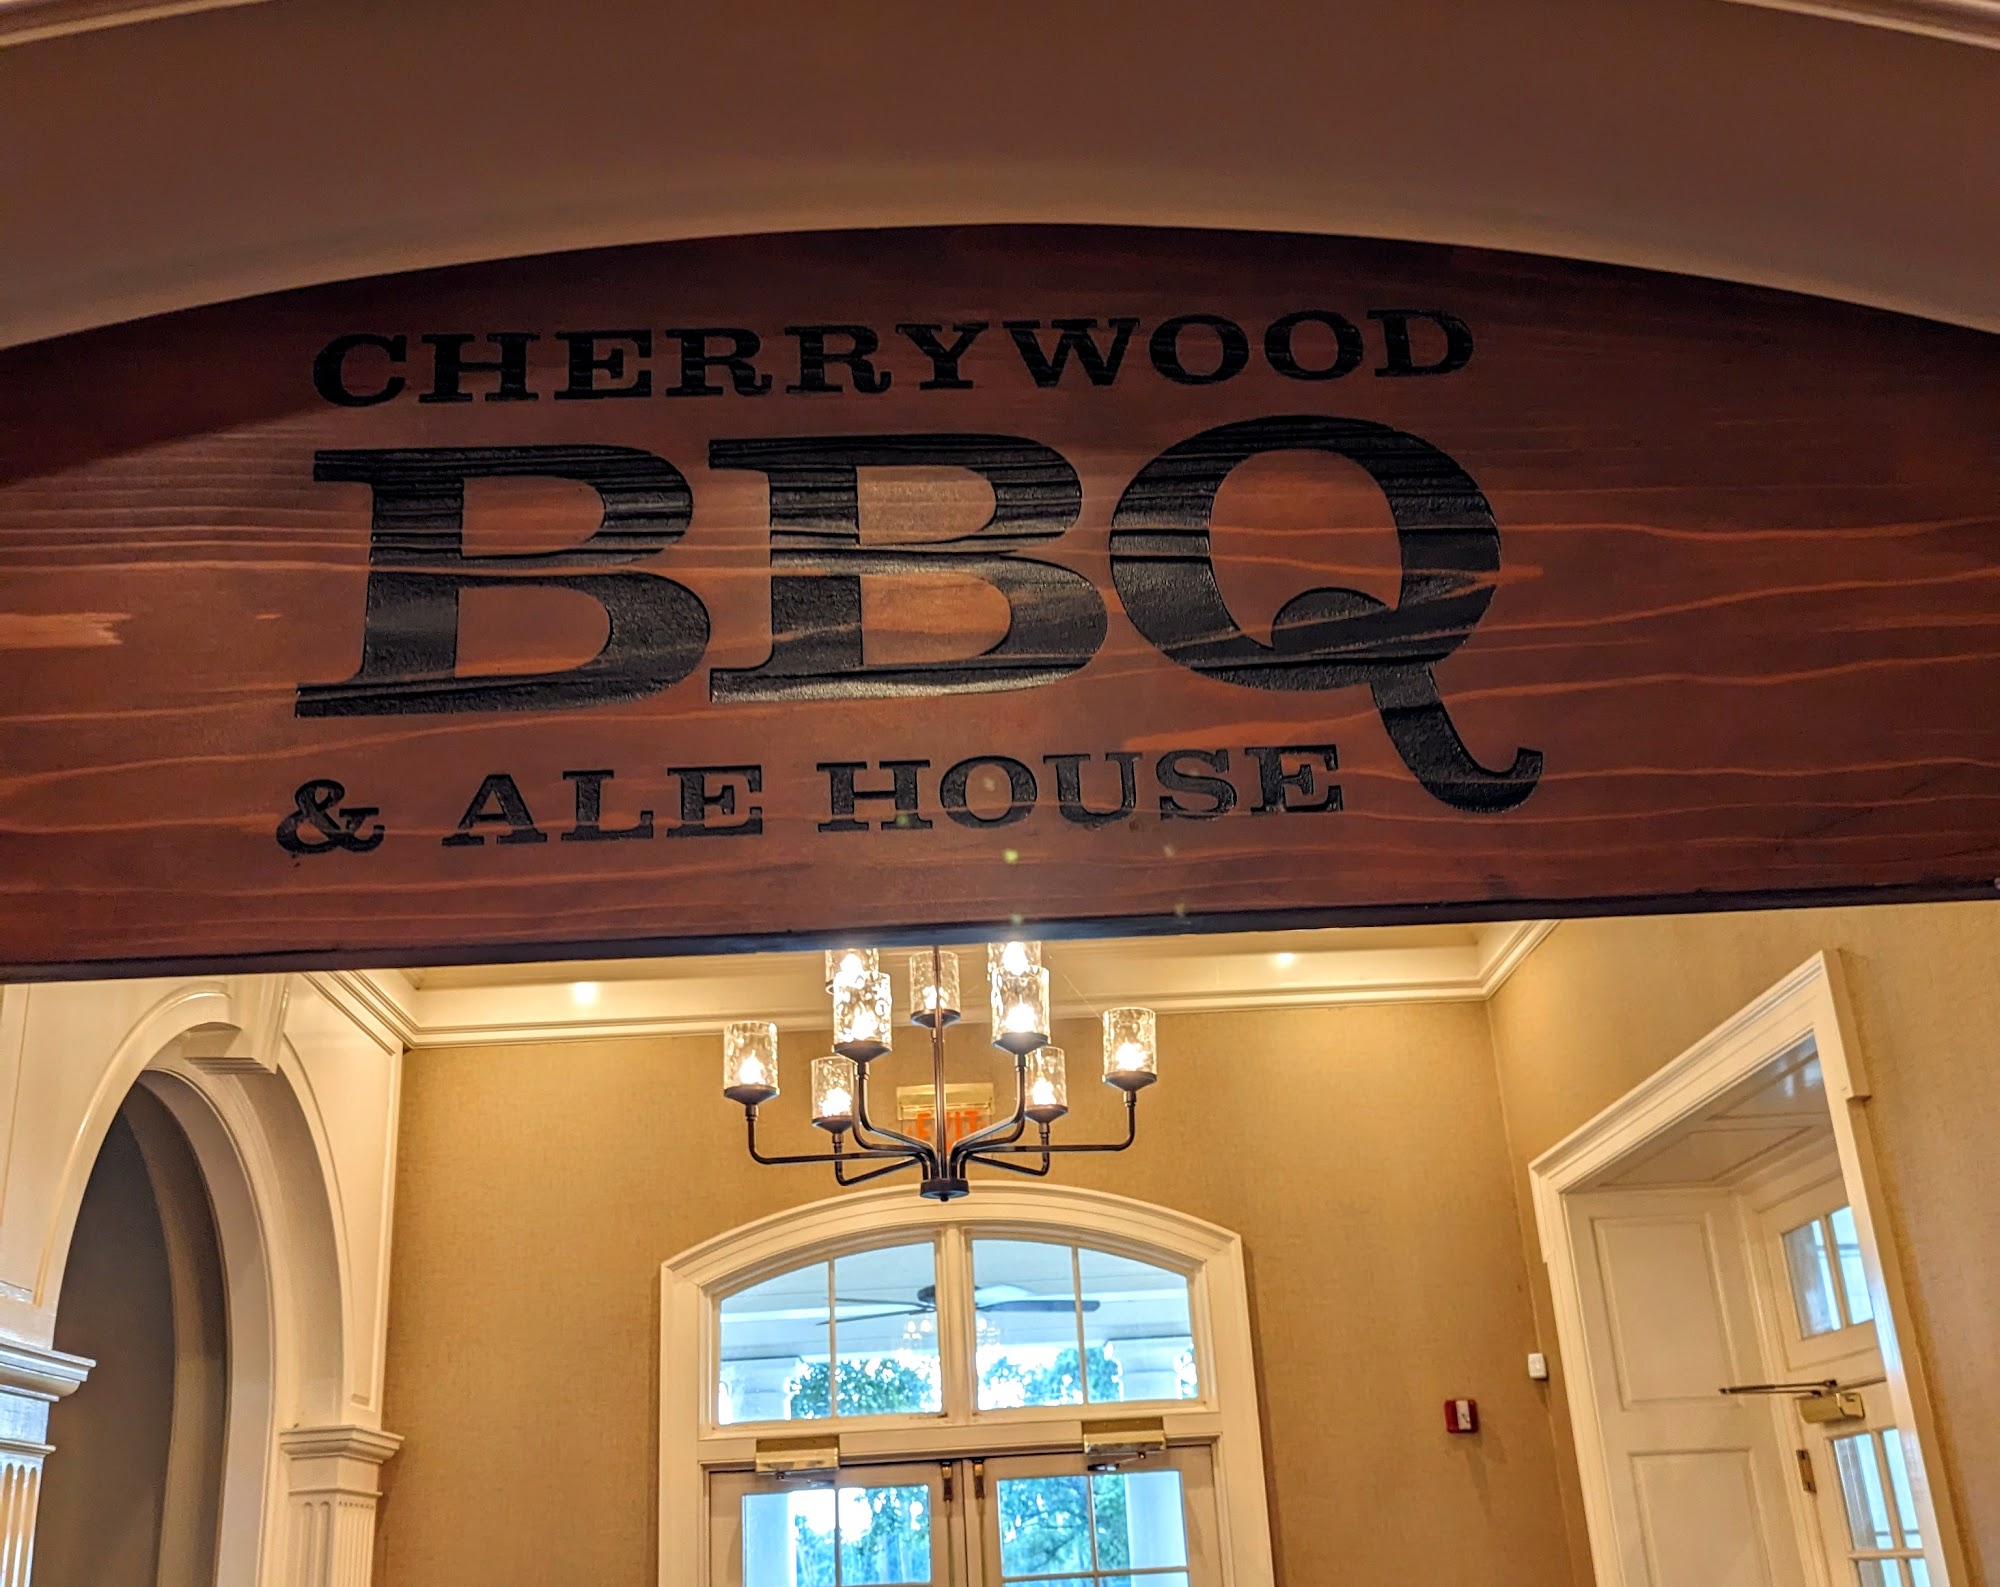 Cherrywood BBQ & Ale House